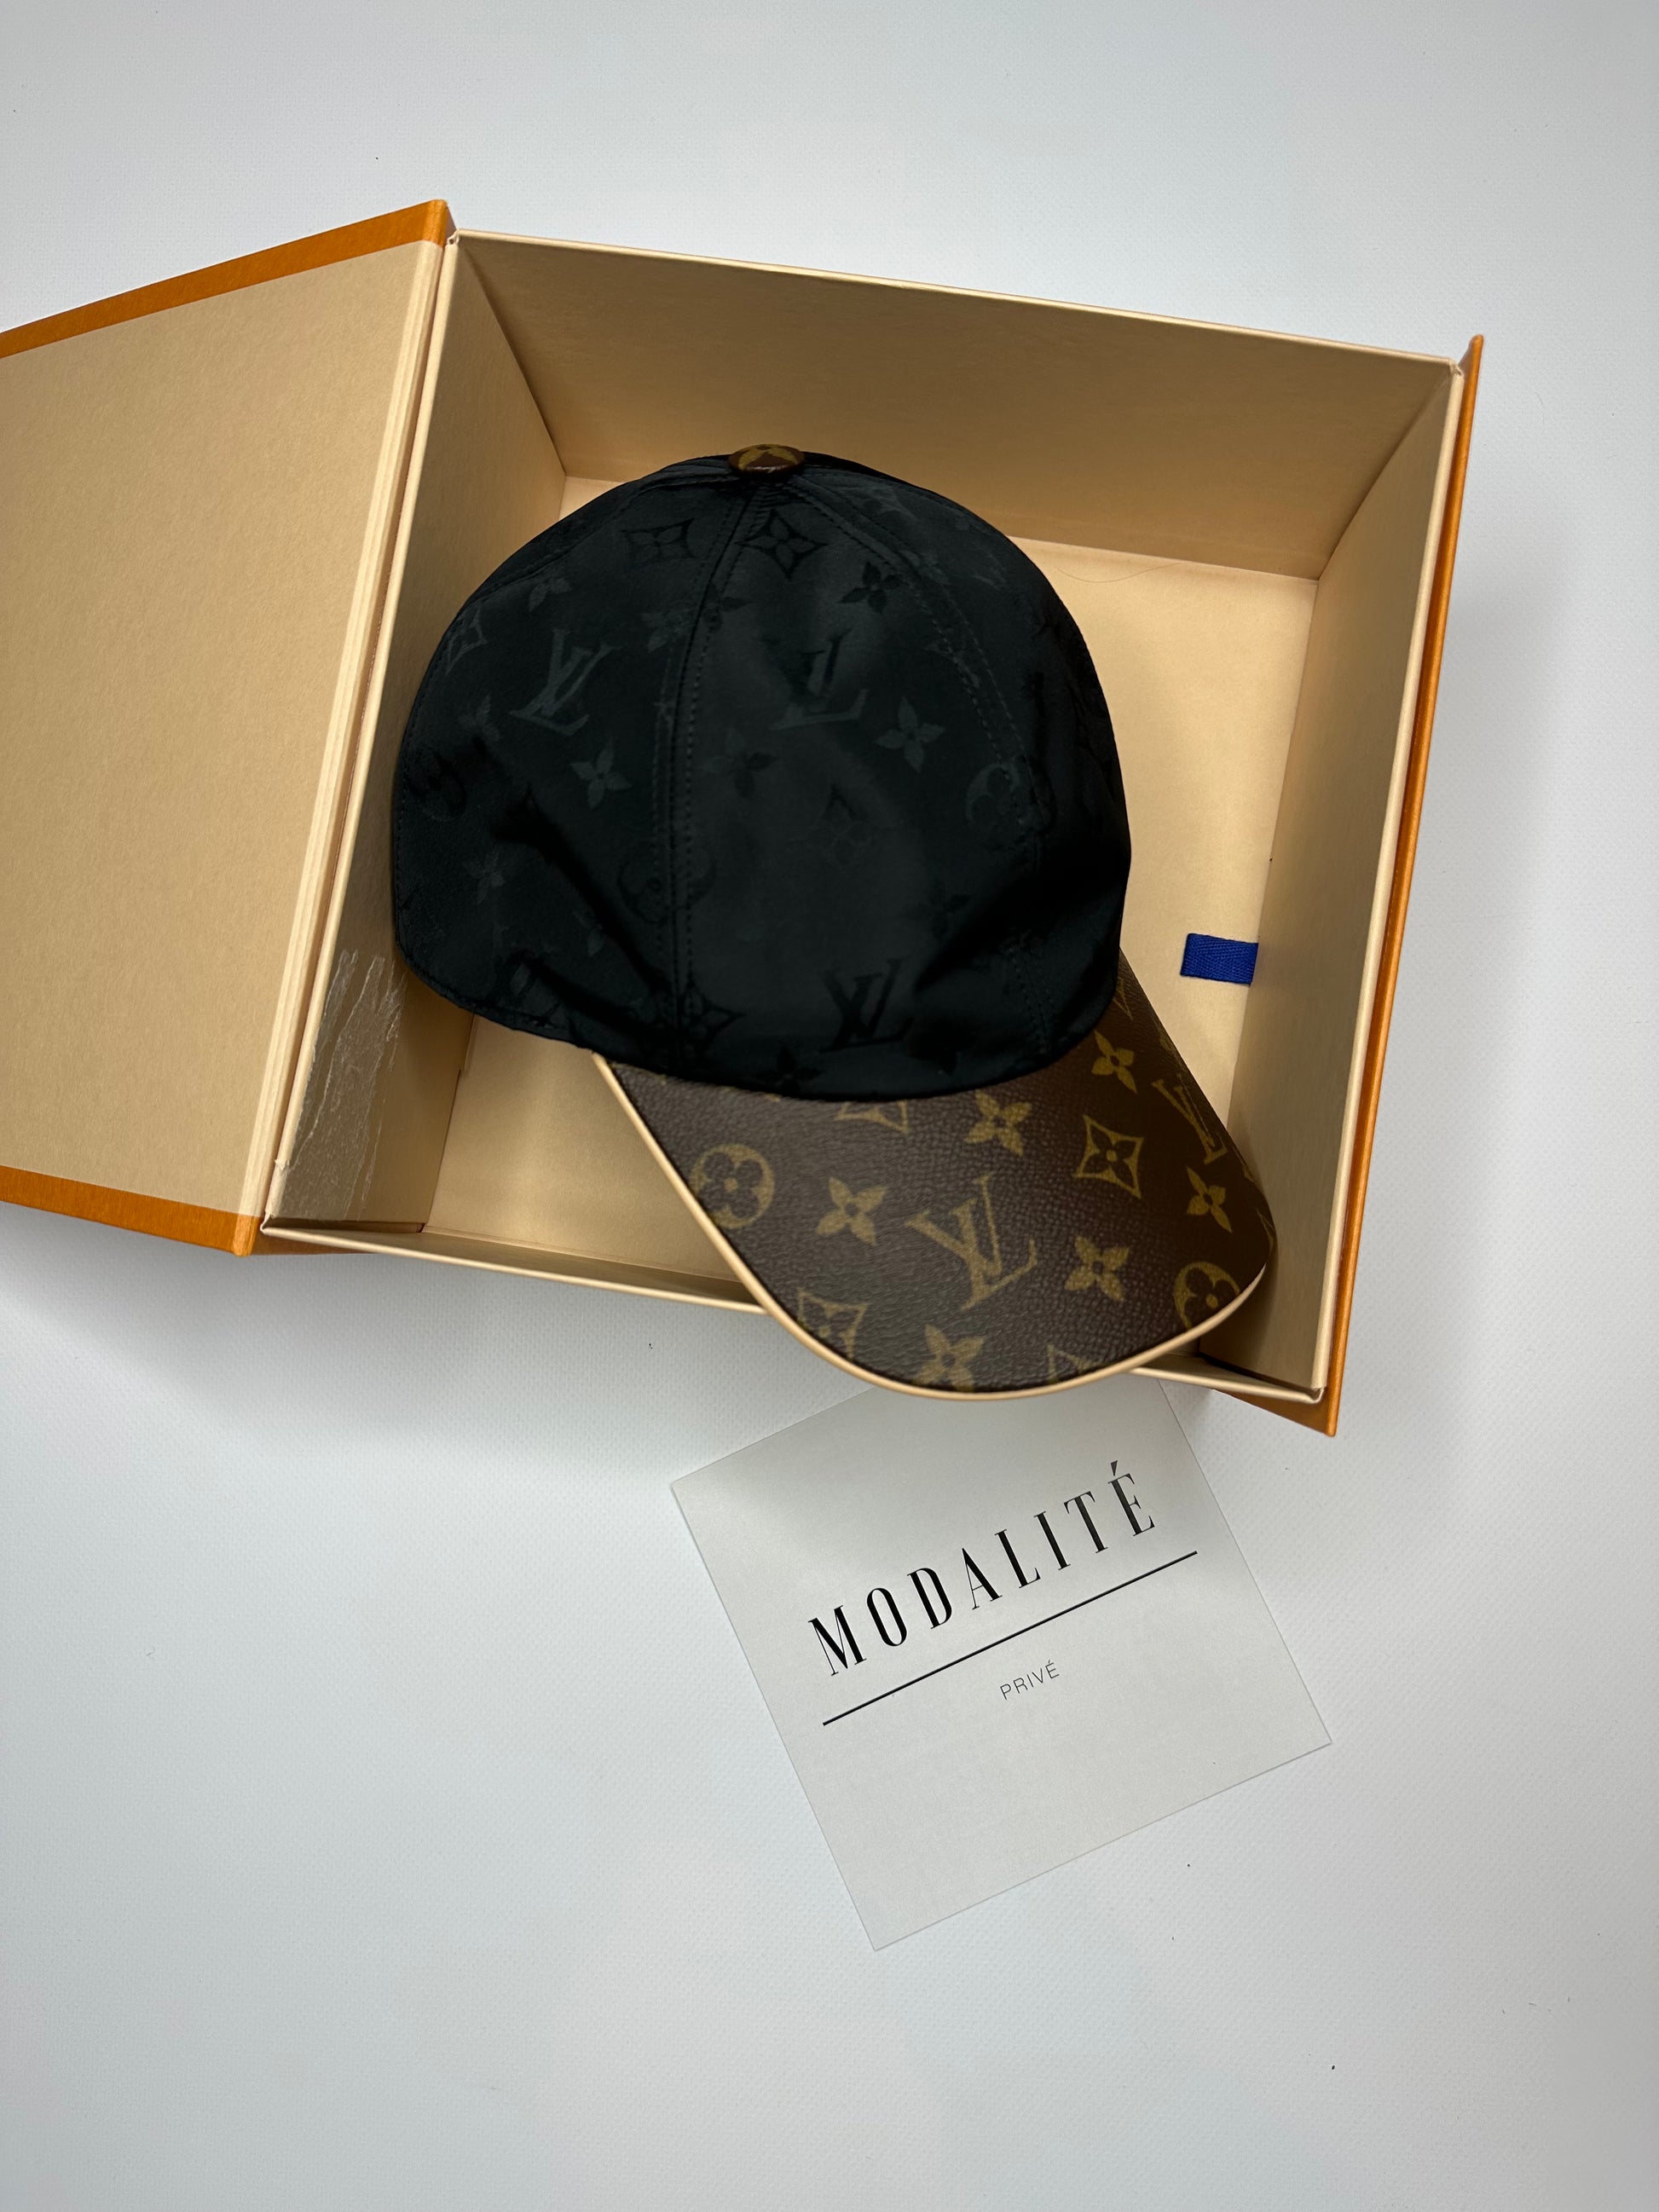 Louis Vuitton Monogram Cap – Modalite Prive